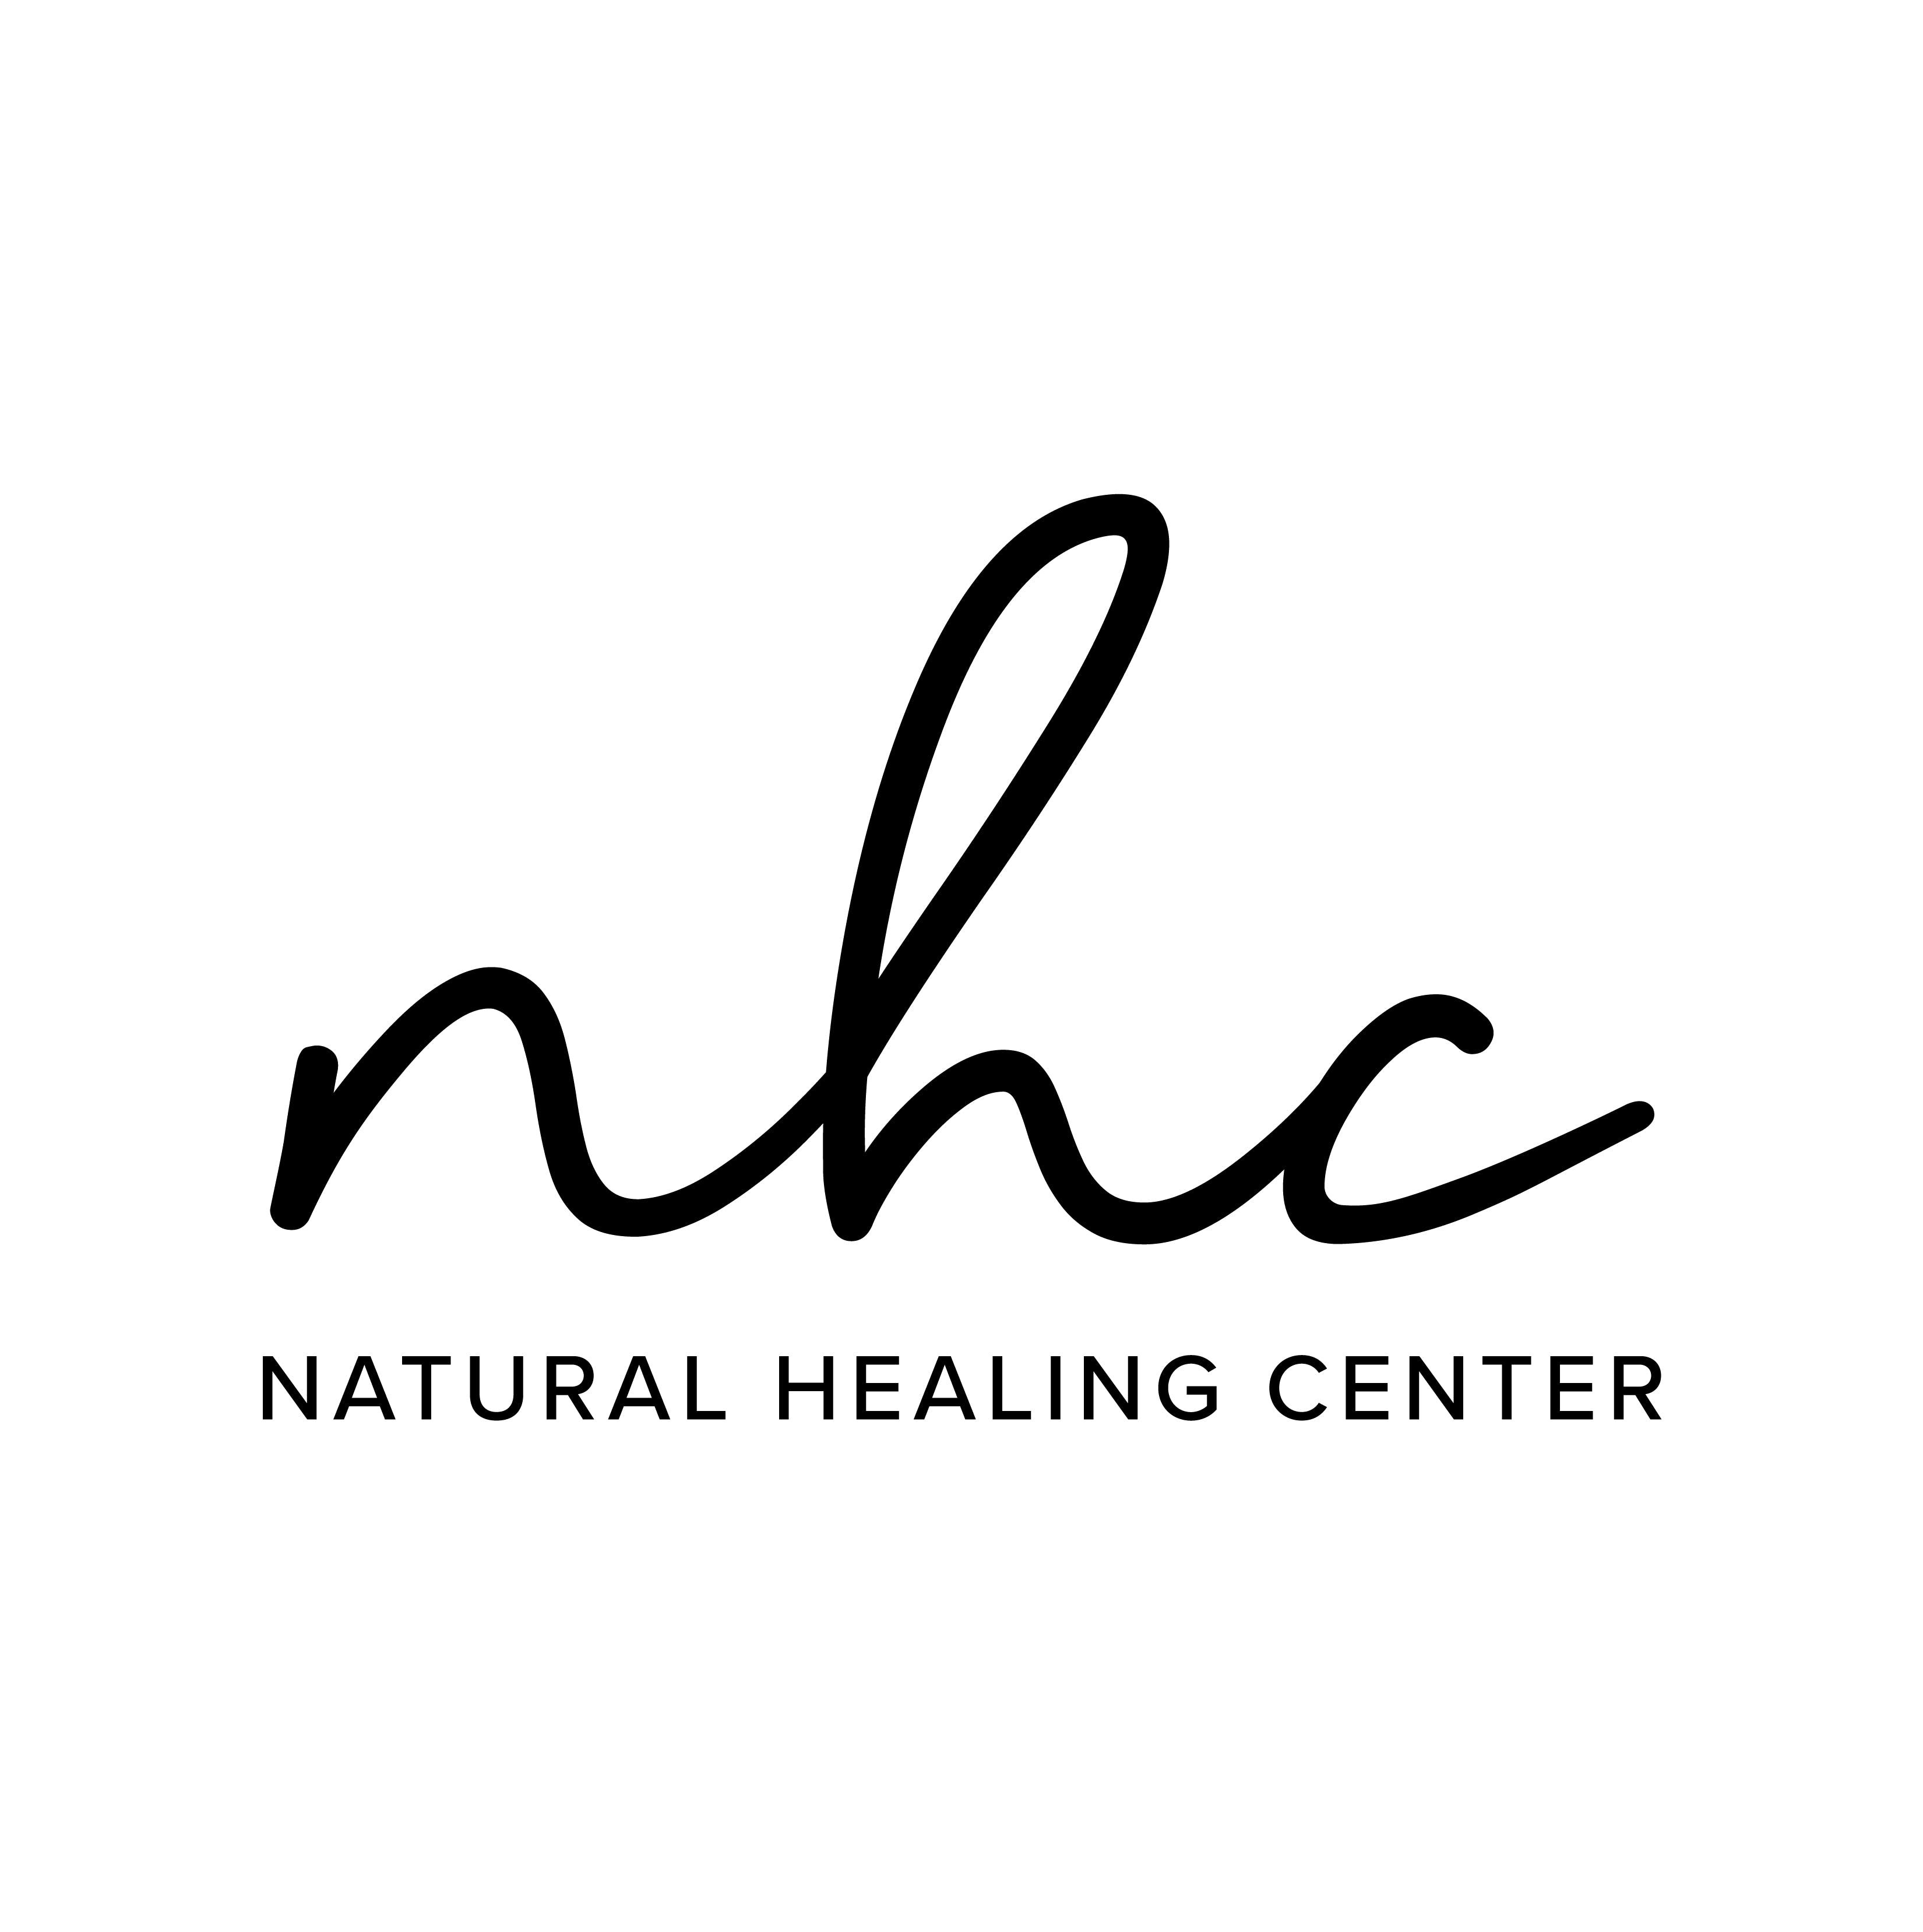 Natural Healing Center Turlock Cannabis Dispensary